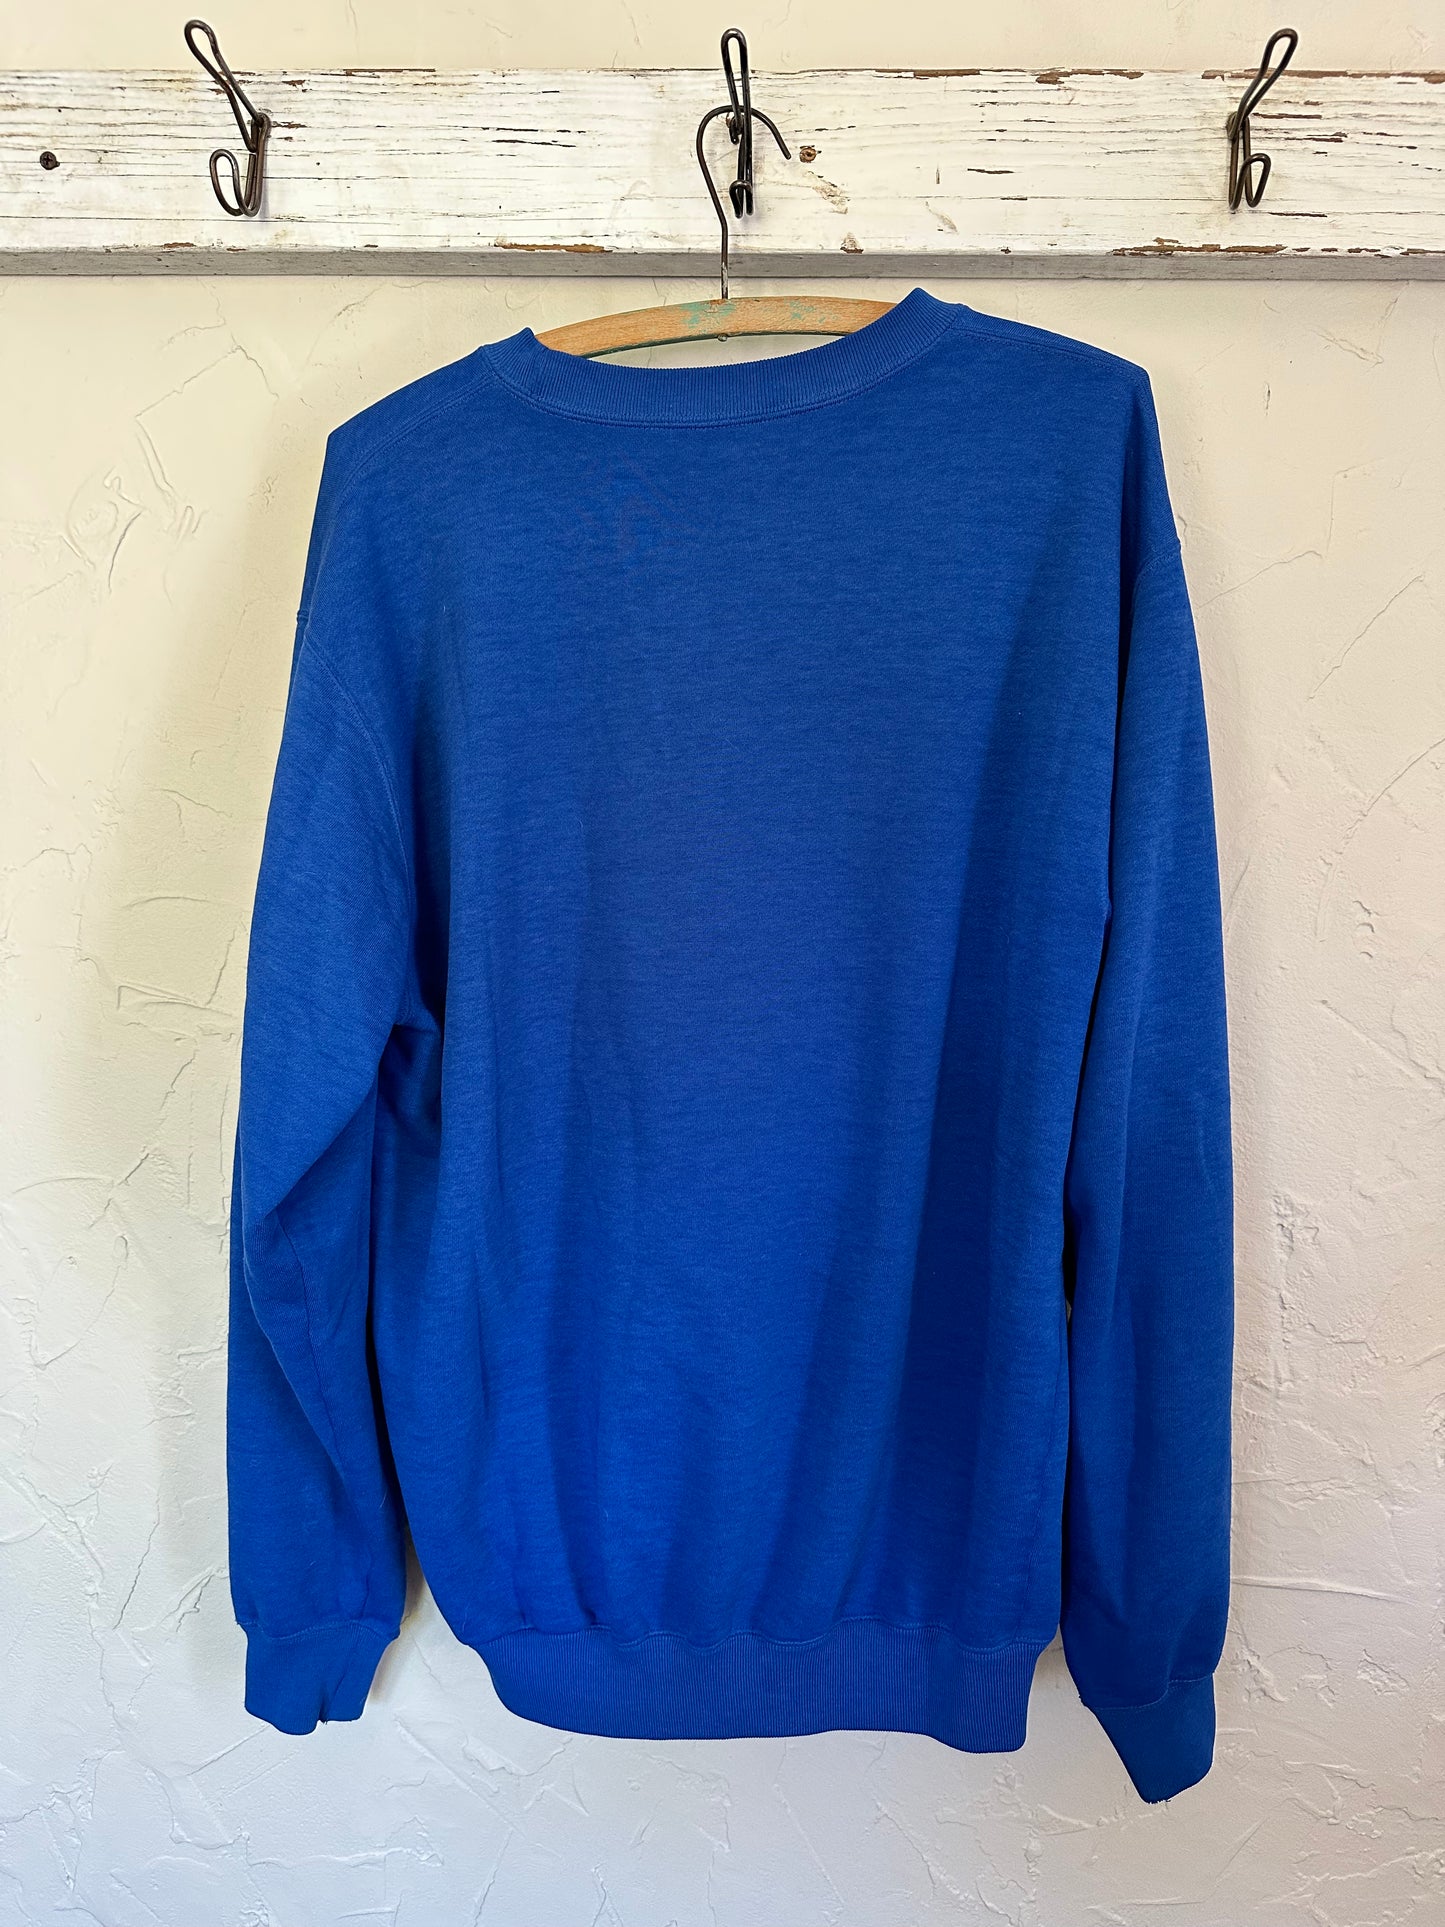 80s/90s Blank Royal Blue Sweatshirt